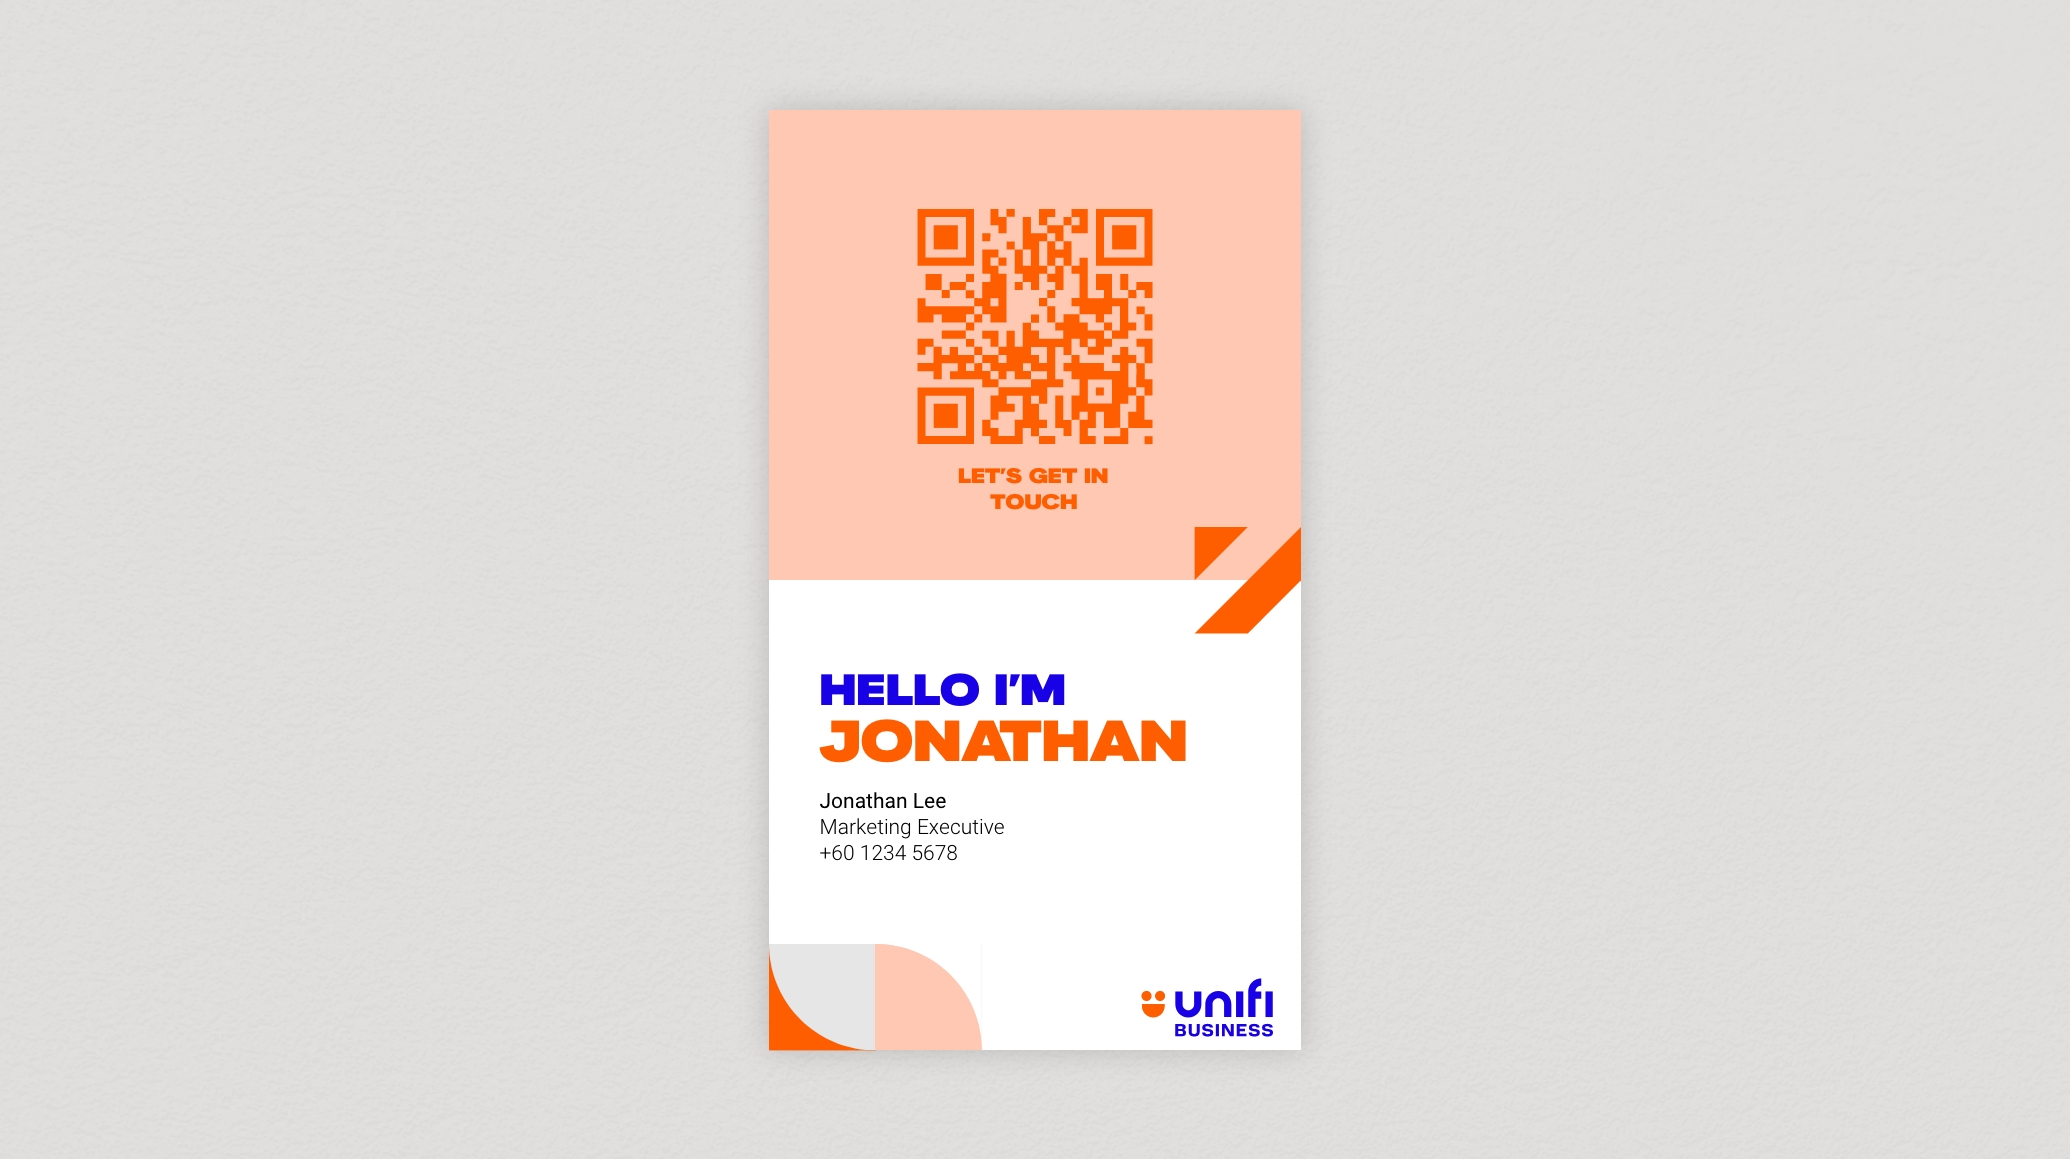 Unifi Business Digital Name Card